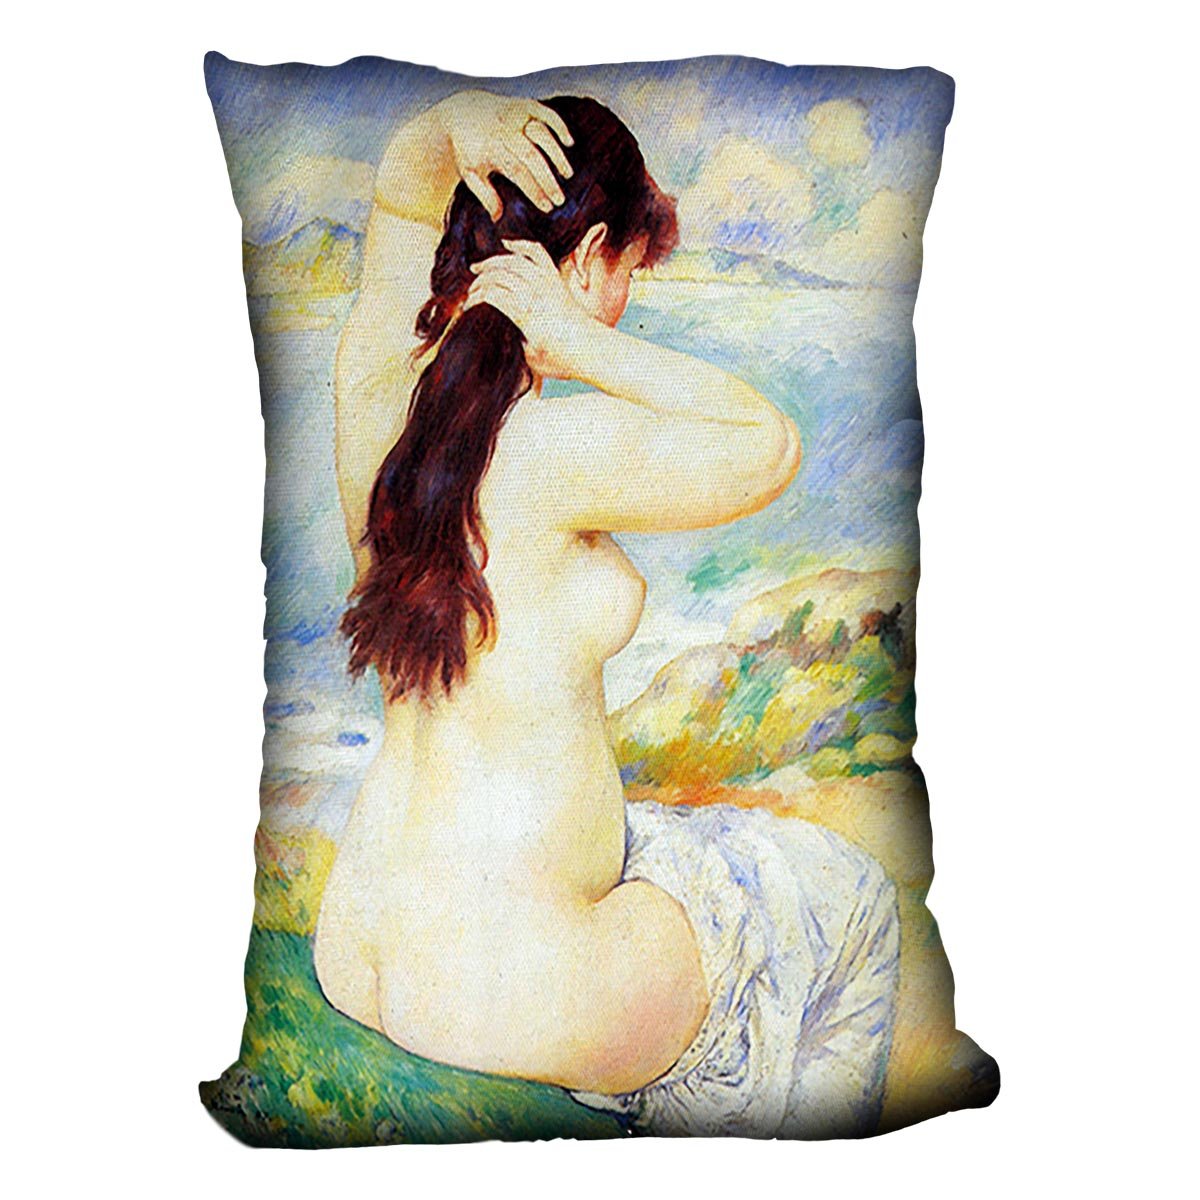 A Bather by Renoir Throw Pillow